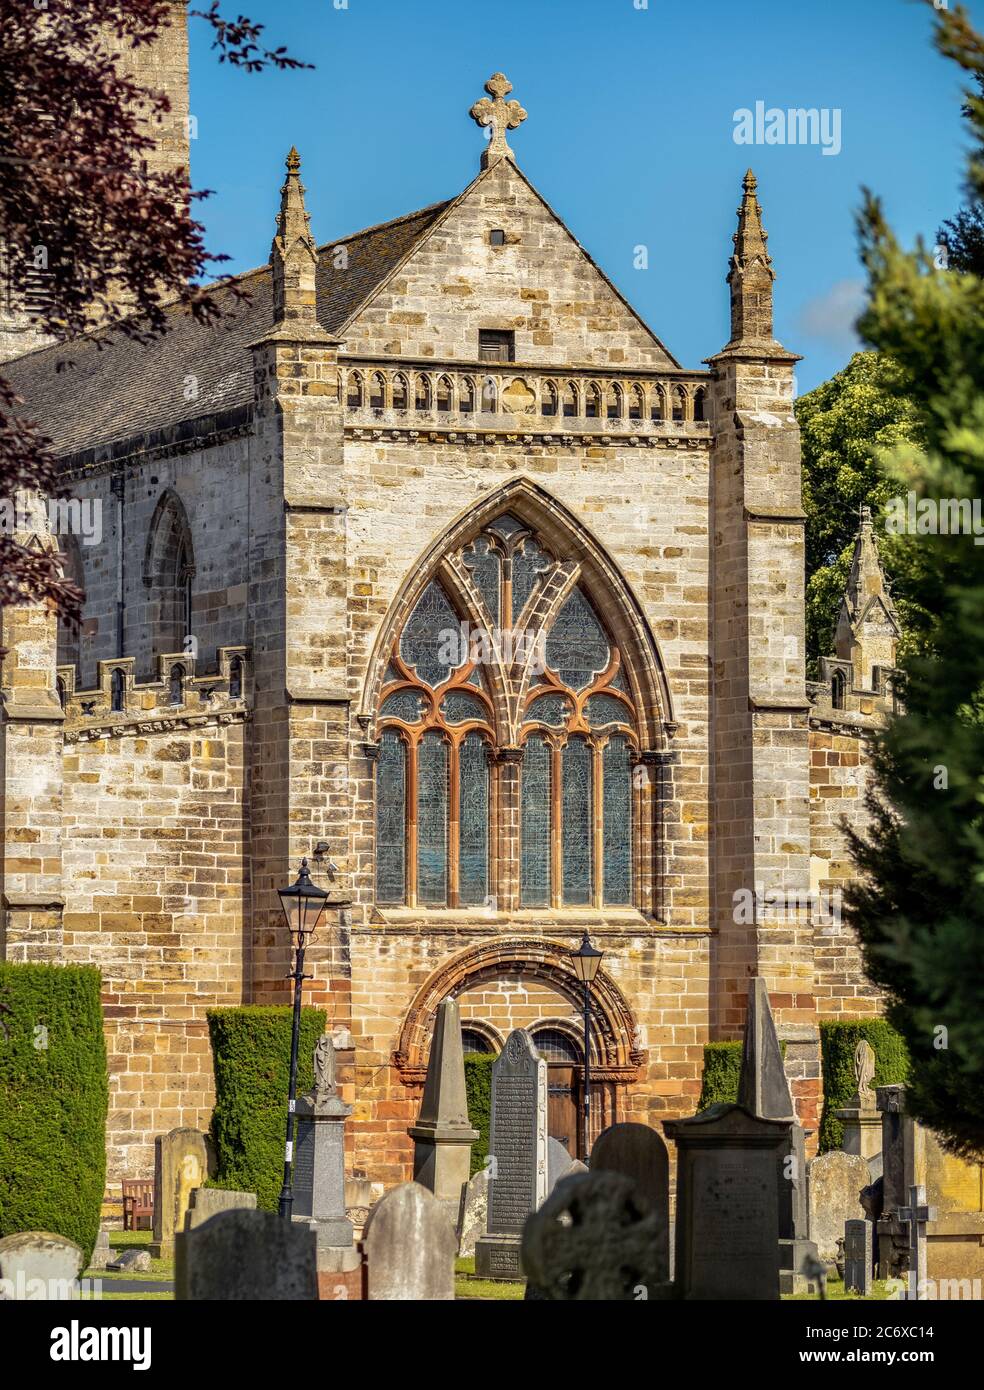 The Collegiate Church of St Mary the Virgin, a Church of Scotland parish church in Haddington, East Lothian, Scotland, UK. Stock Photo